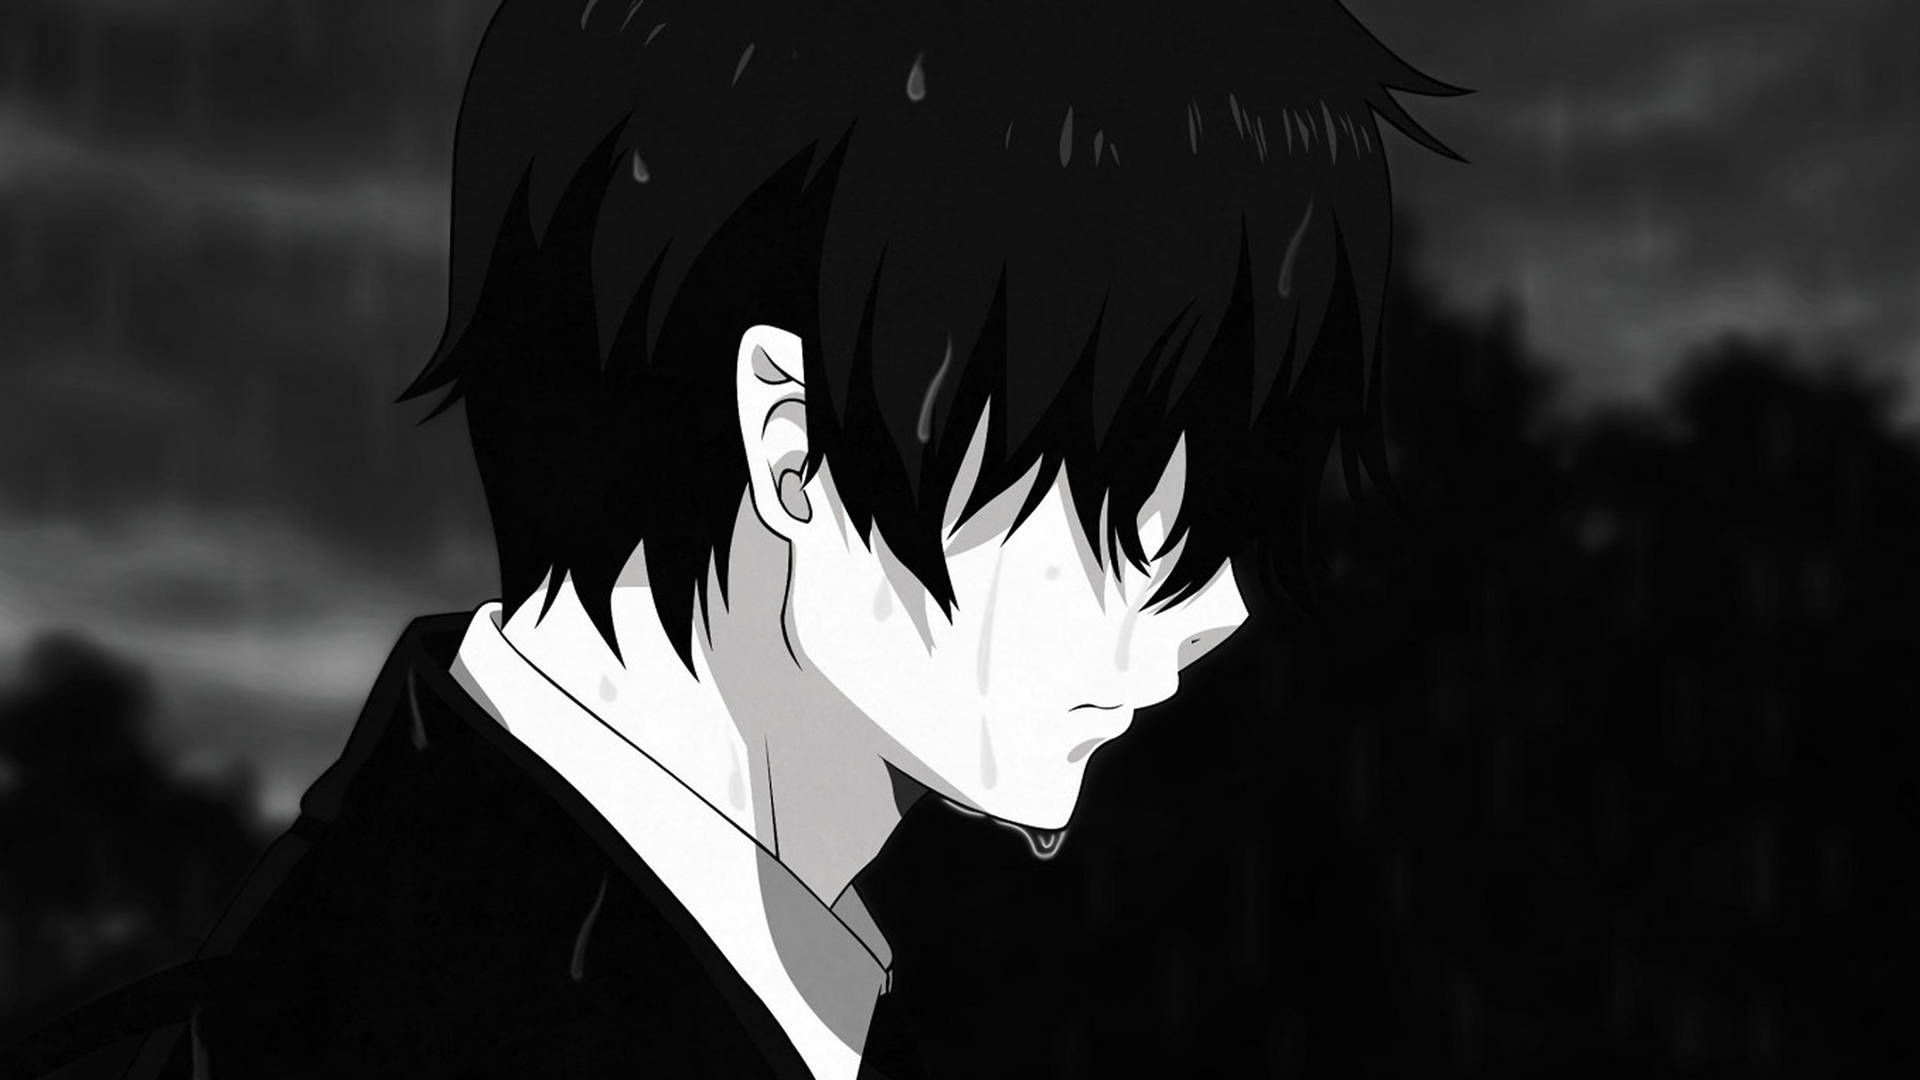 Anime 4K mand græder i regnen Wallpaper